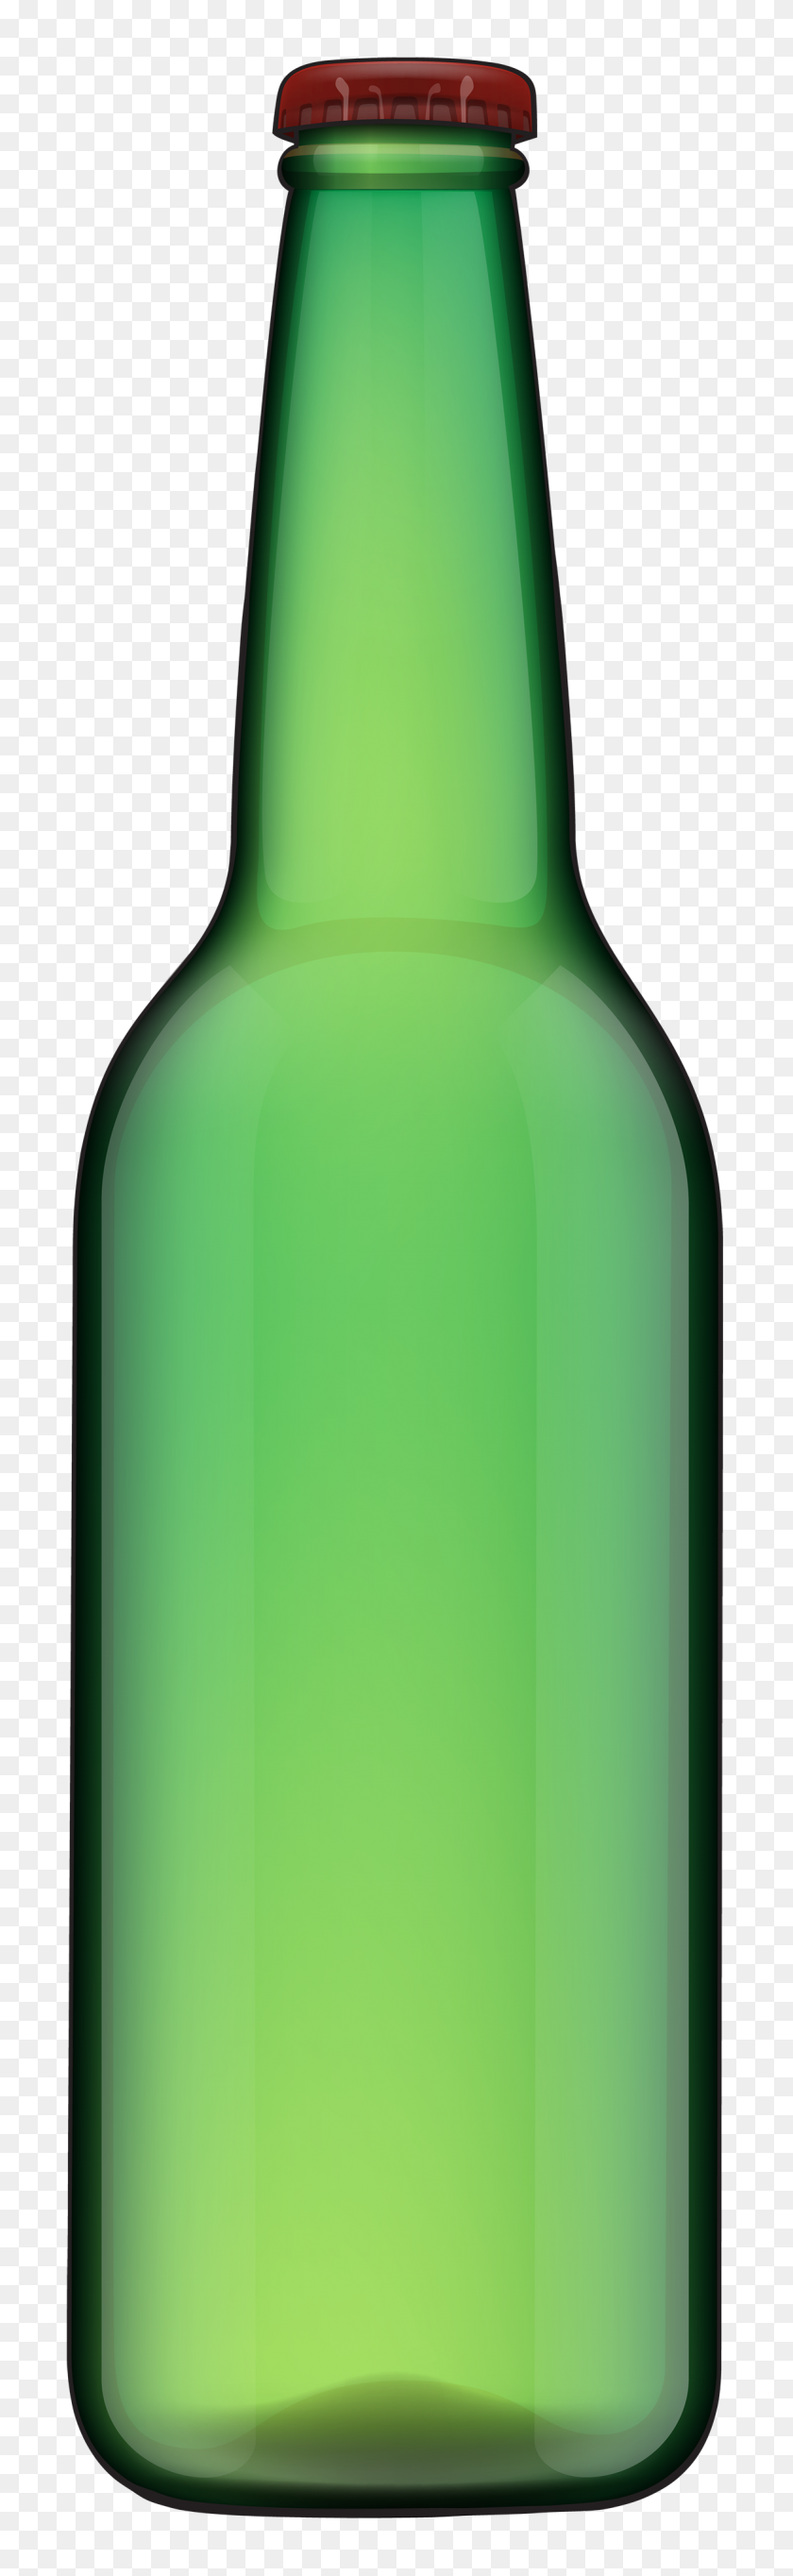 1169x4000 Beer Bottle Clipart Desktop Backgrounds - Corona Bottle PNG